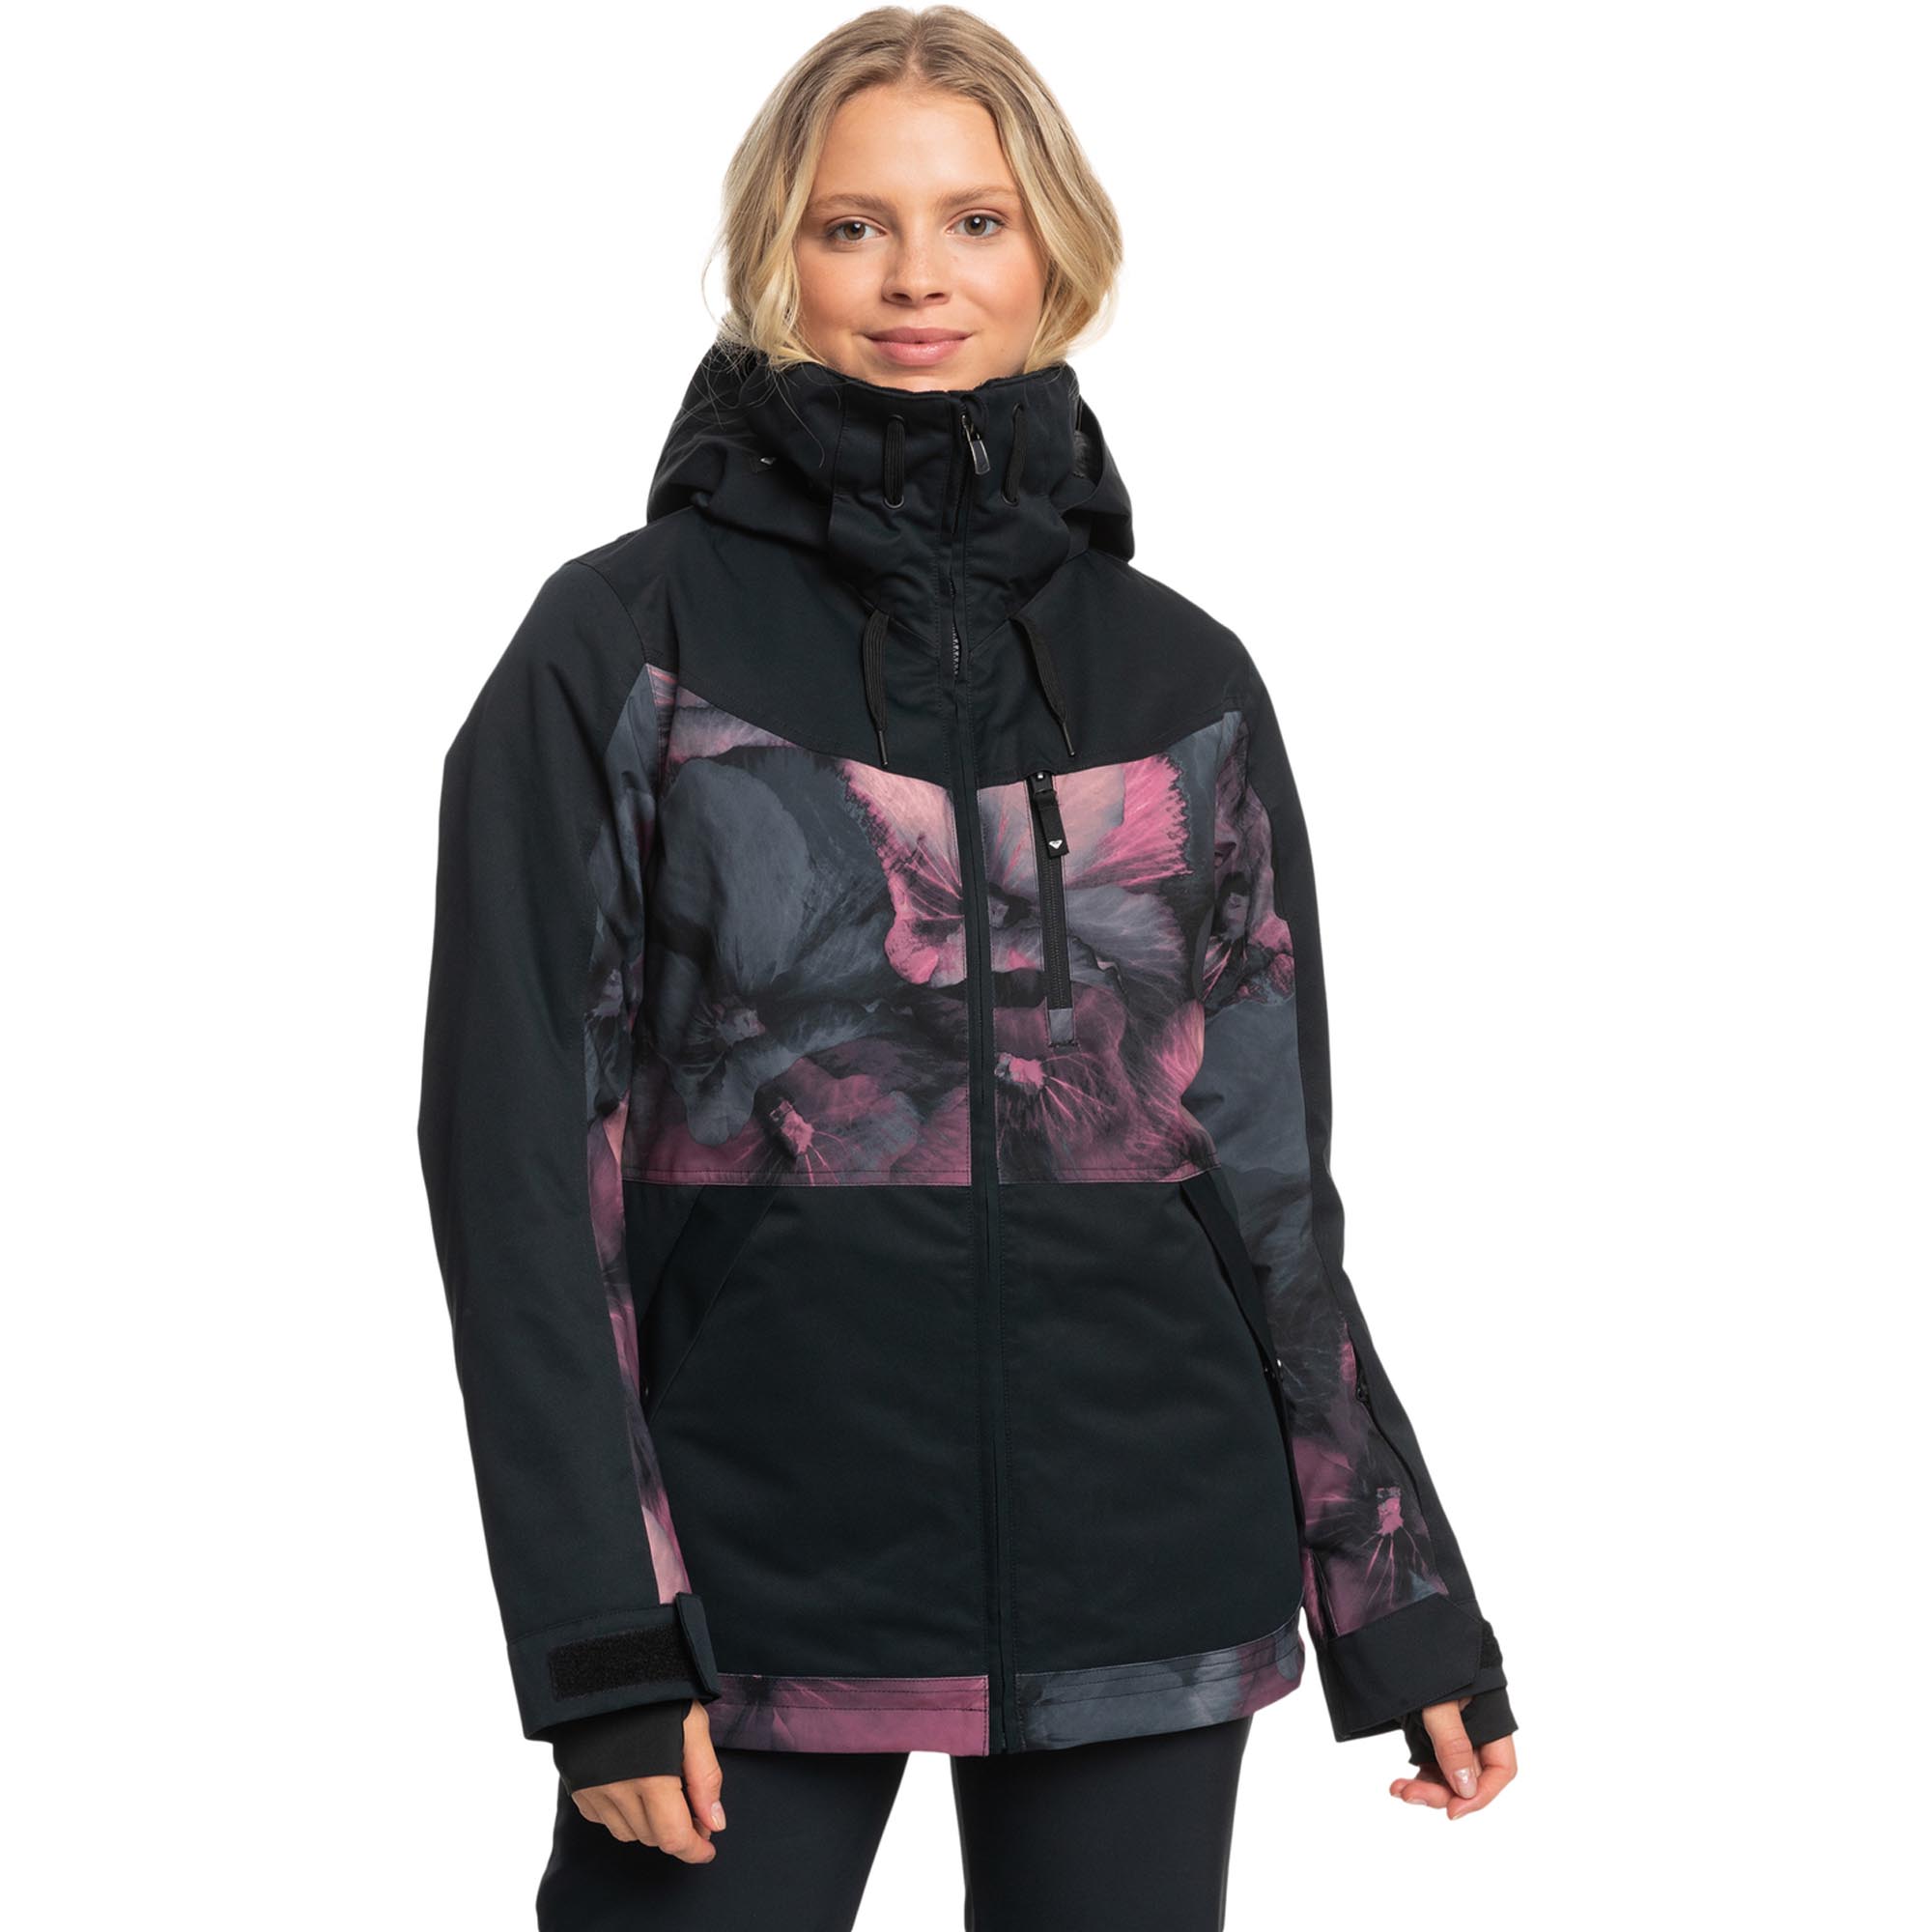 Roxy Presence Women's Ski/Snowboard Parka Jacket